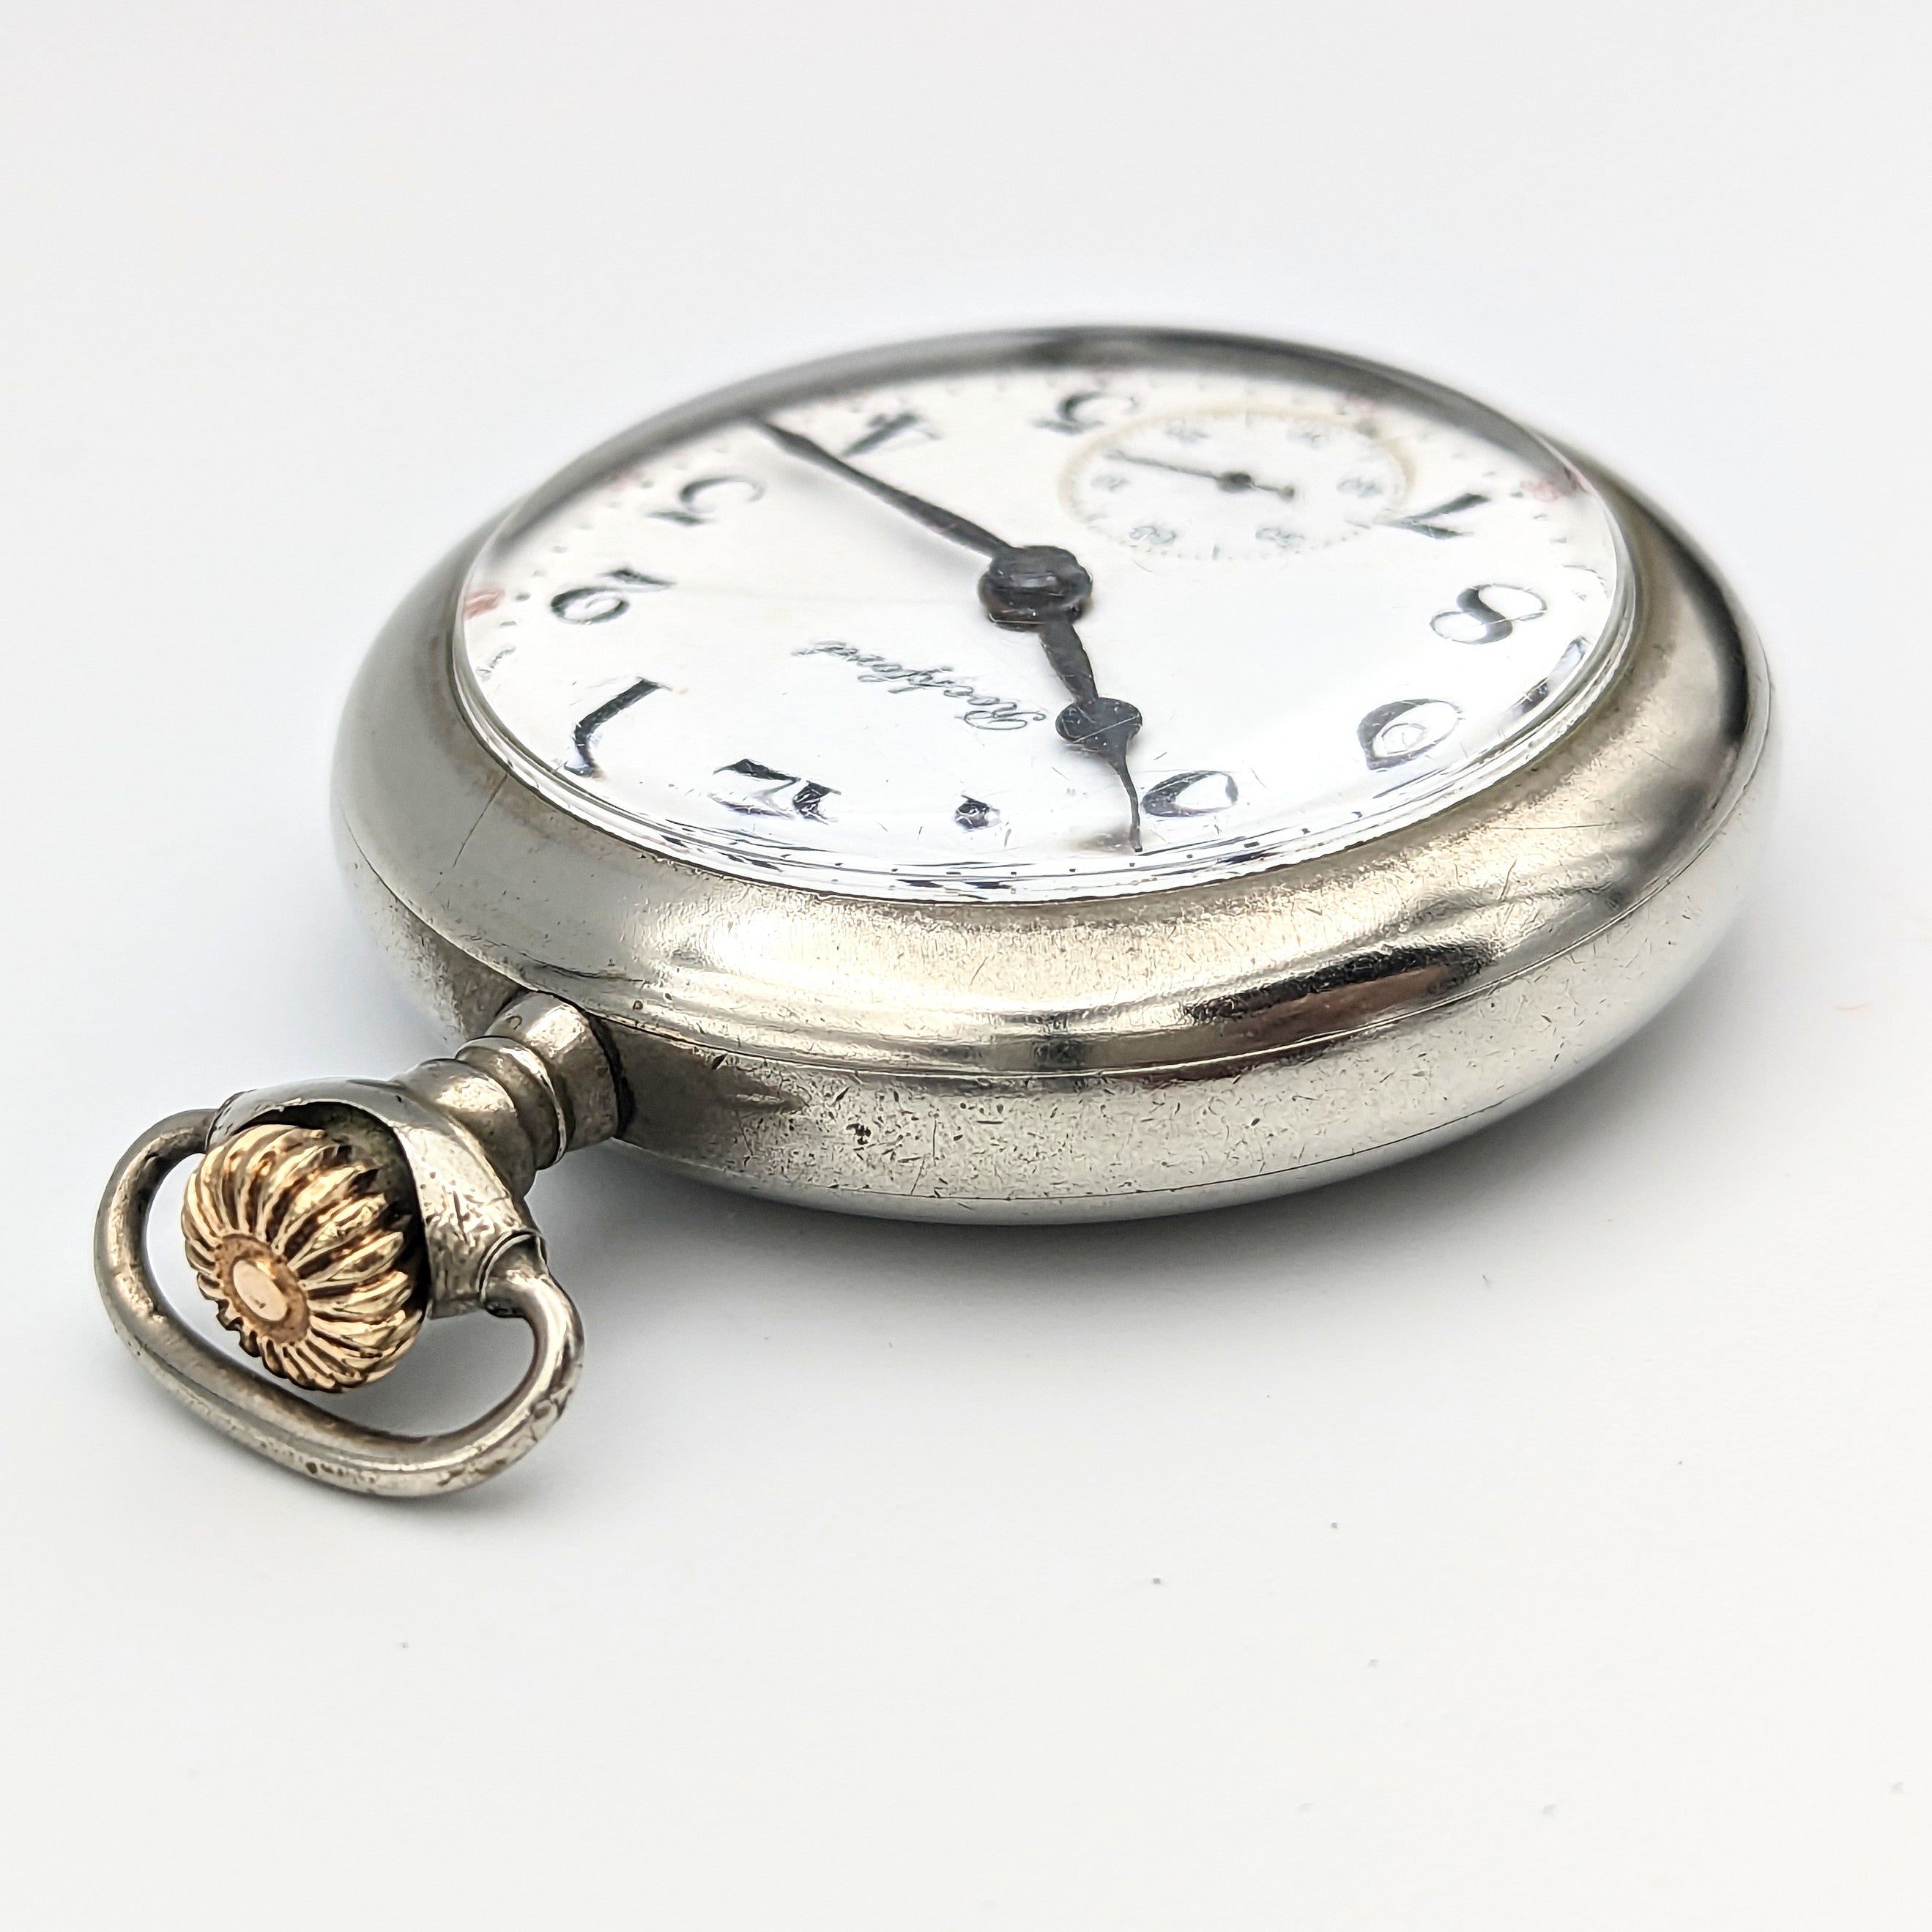 Antique 1910 ROCKFORD Pocket Watch Size 18s Grade 935 17 Jewels Pocket Watch